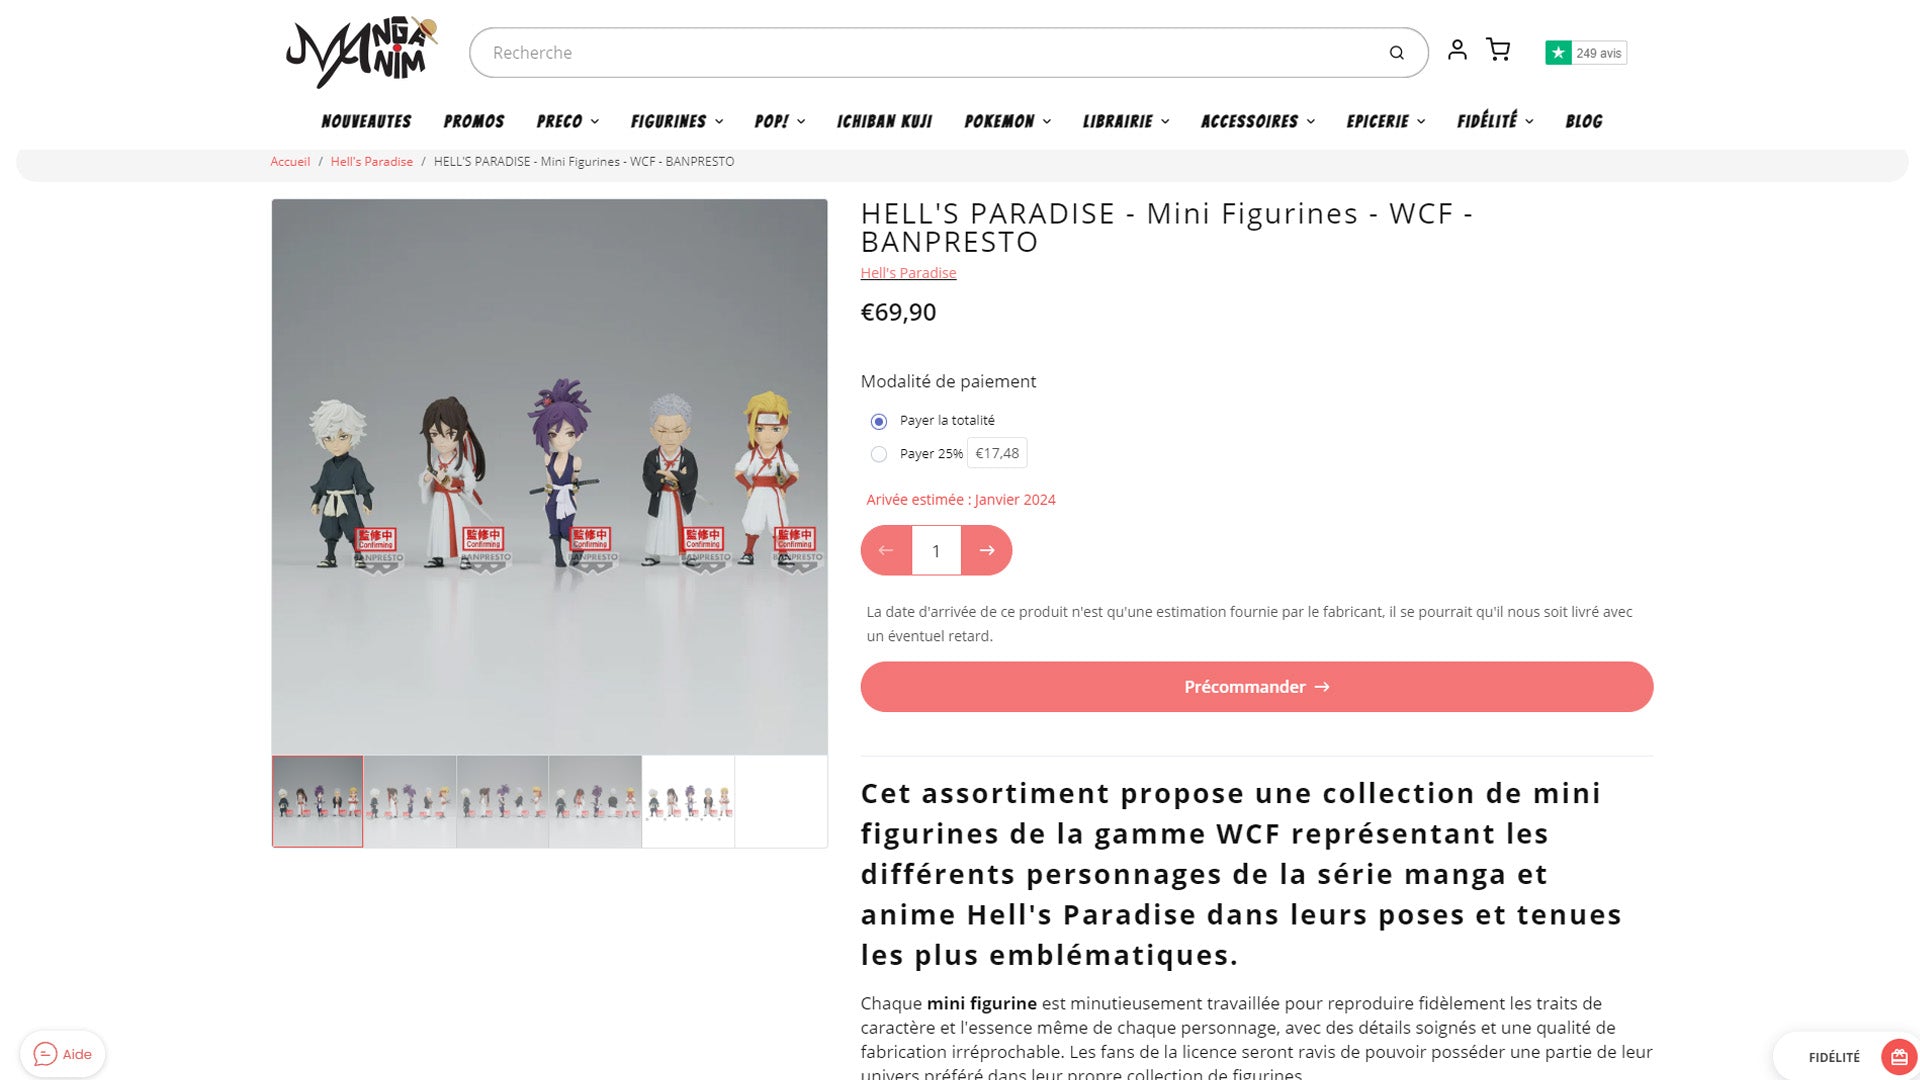 HELL'S PARADISE - Mini Figurines - WCF - BANPRESTO